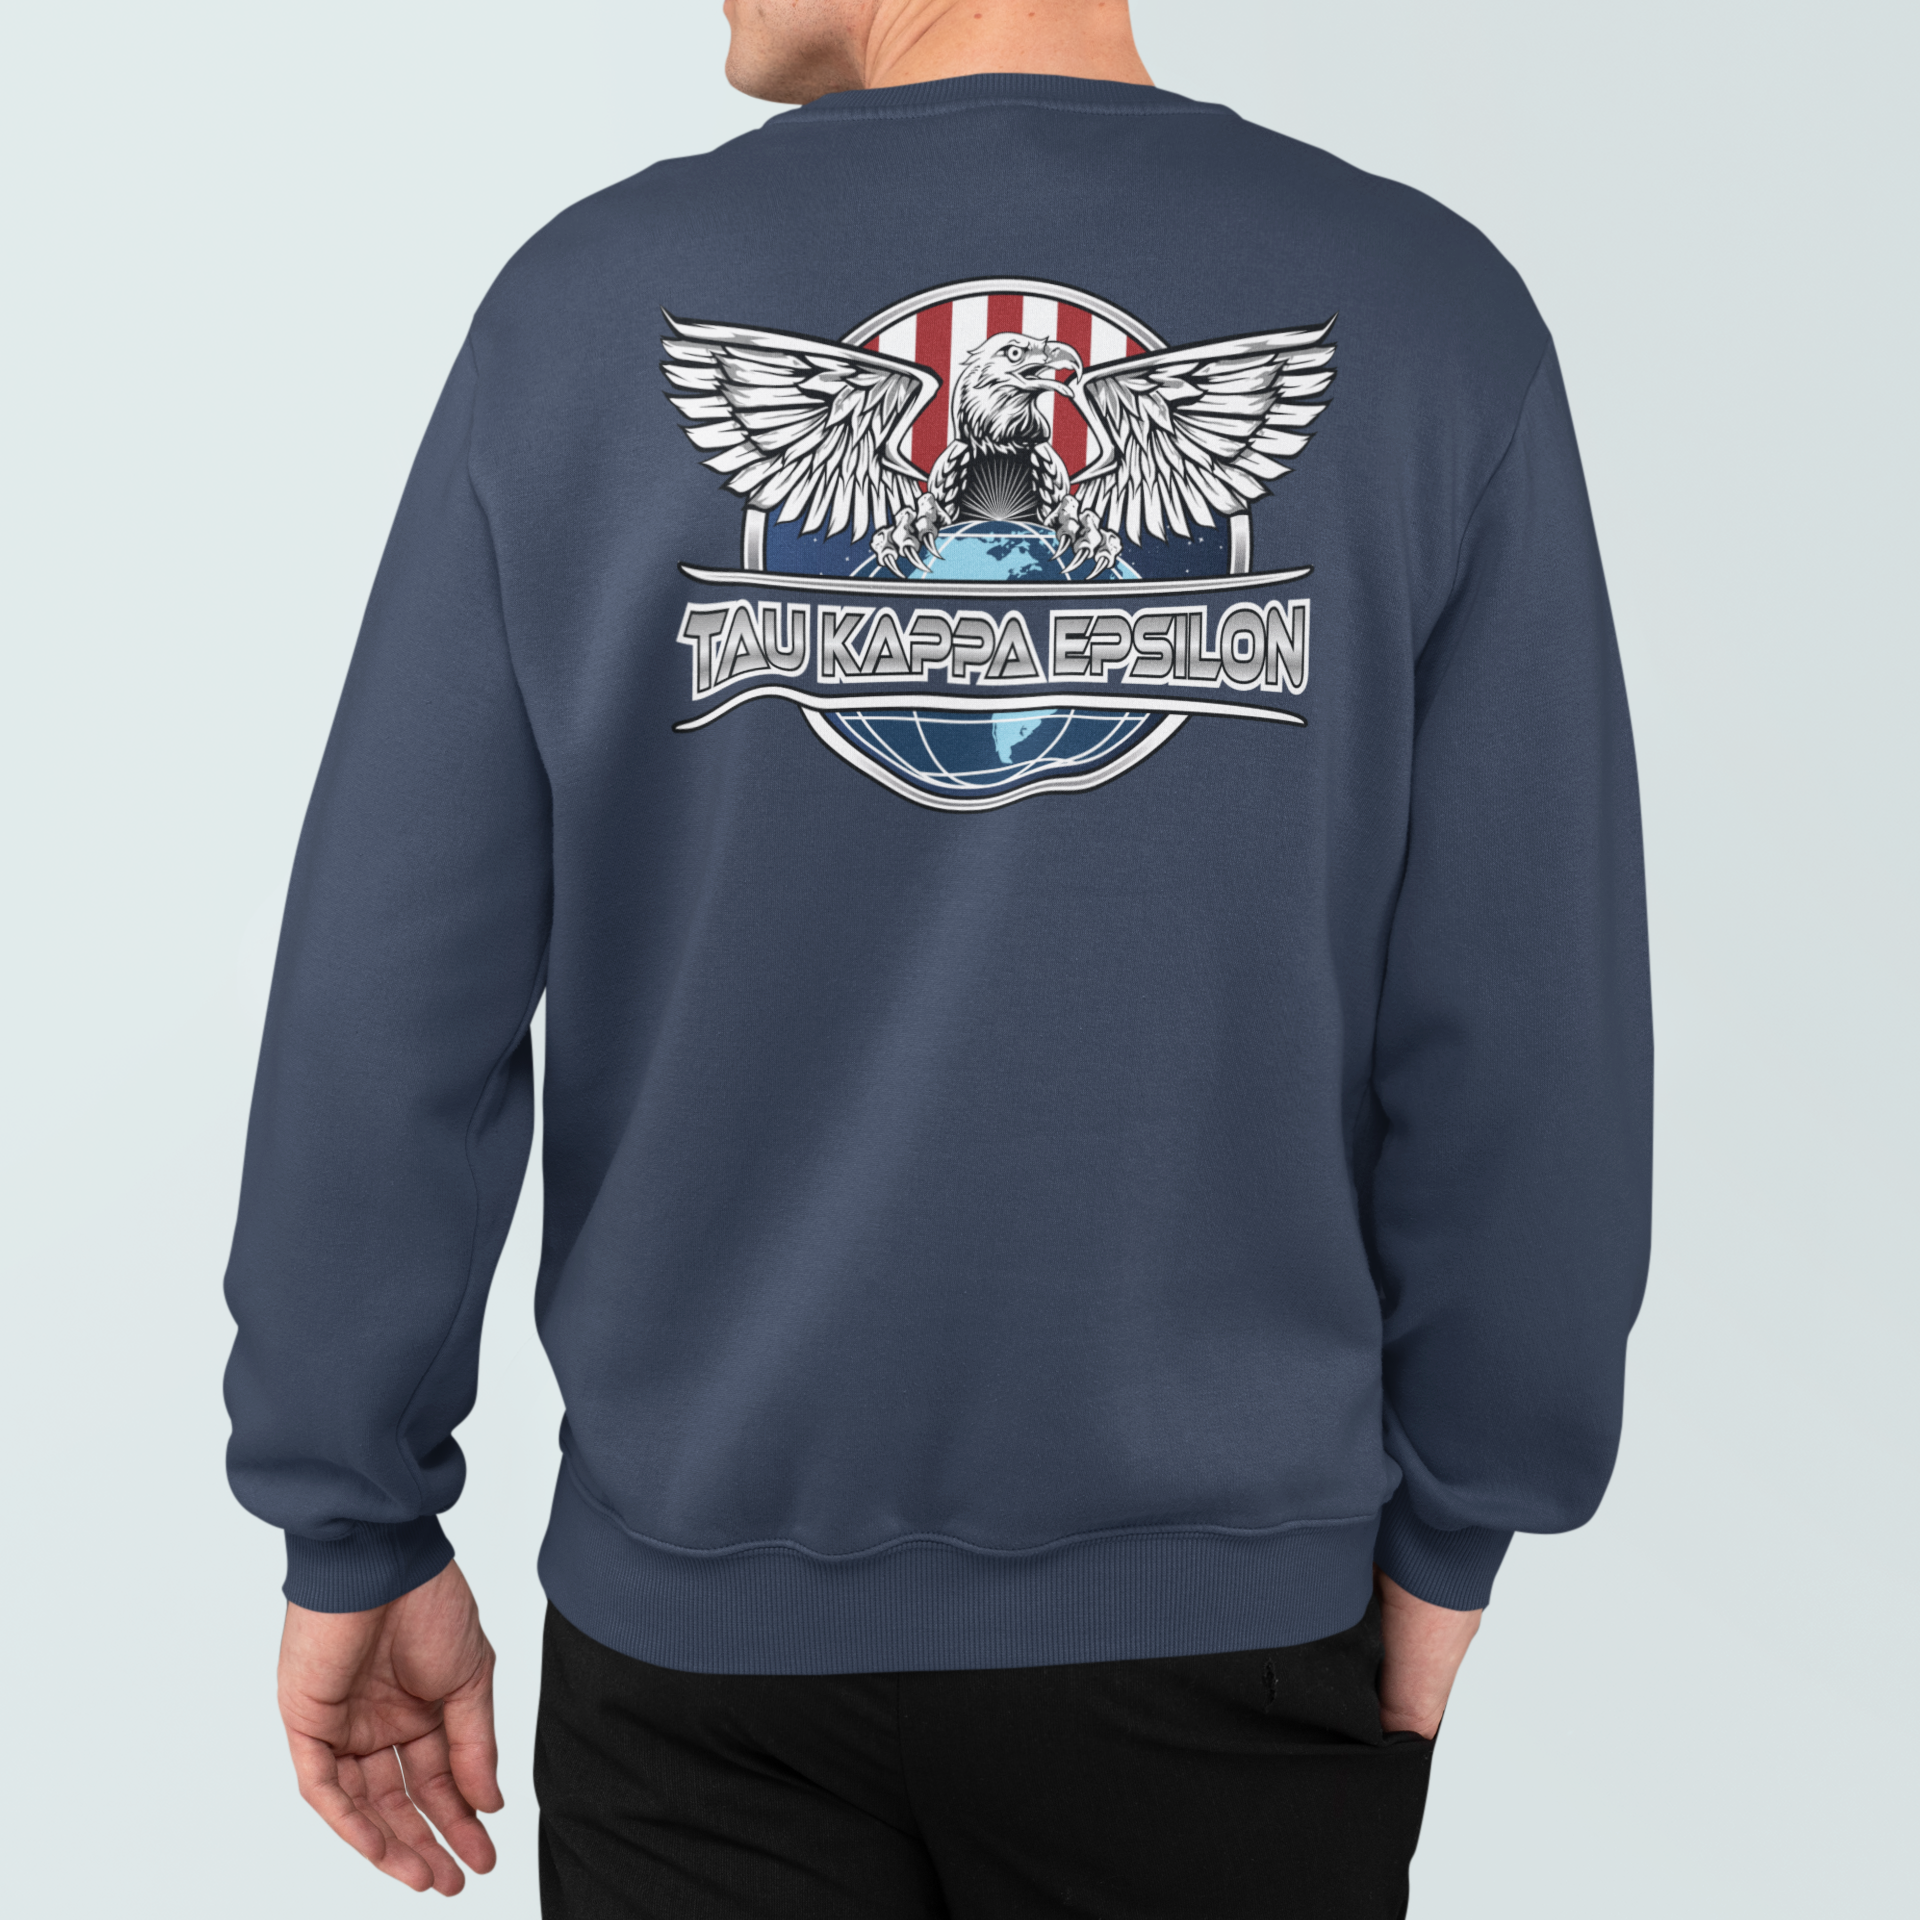 Tau Kappa Epsilon Graphic Crewneck Sweatshirt | The Fraternal Order | Tau Kappa Epsilon Fraternity